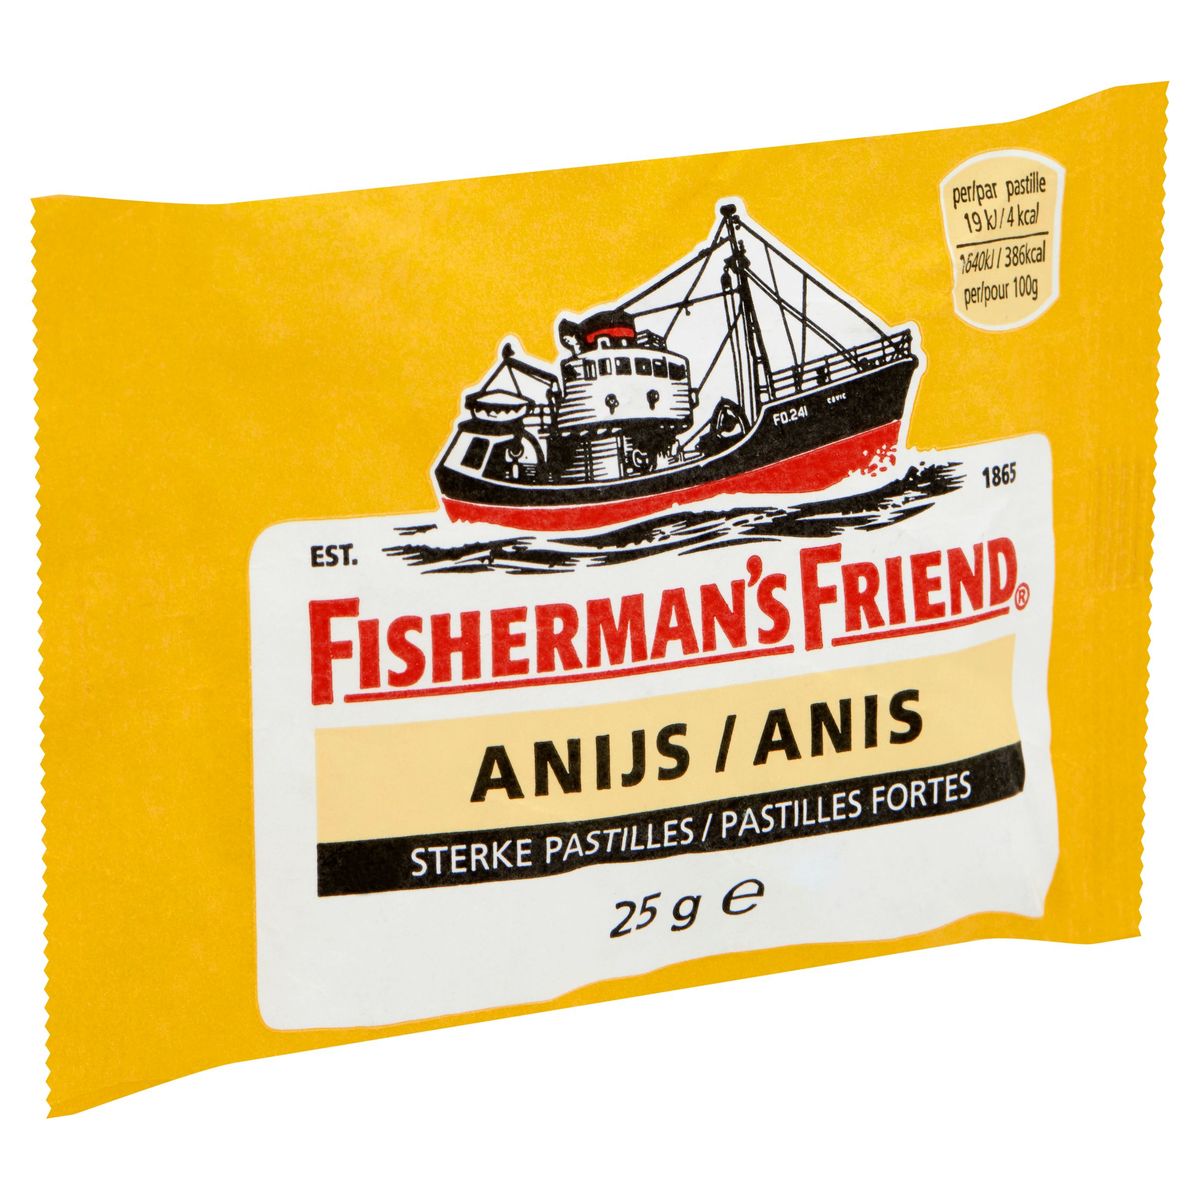 Fisherman's Friend Anis Pastilles Fortes 25 g